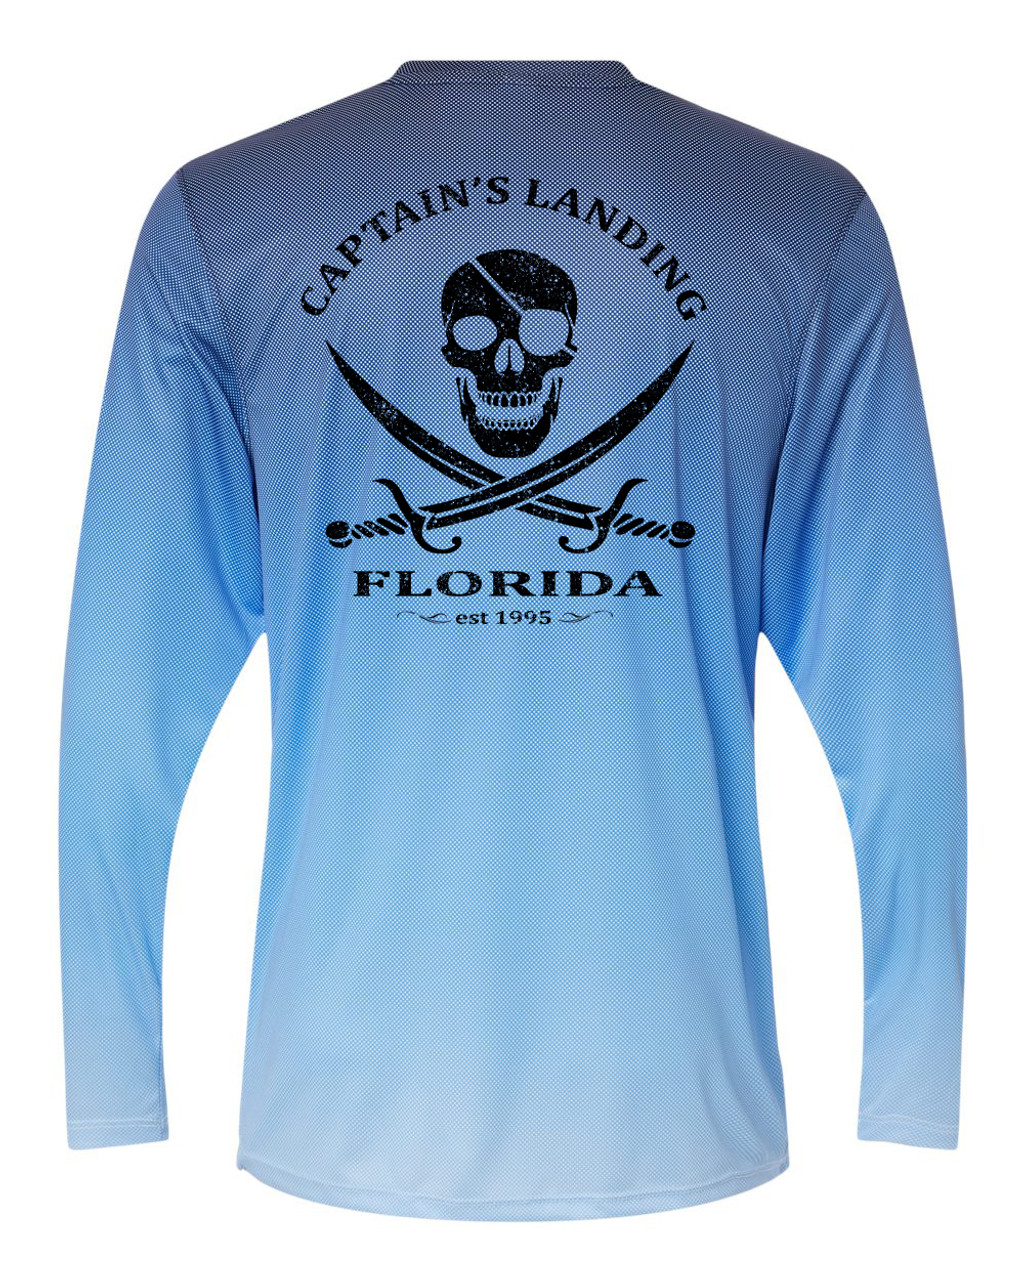 Captain's Landing | Jolly Roger Long Sleeve Sun Protection Shirt - Blue Ombre Small